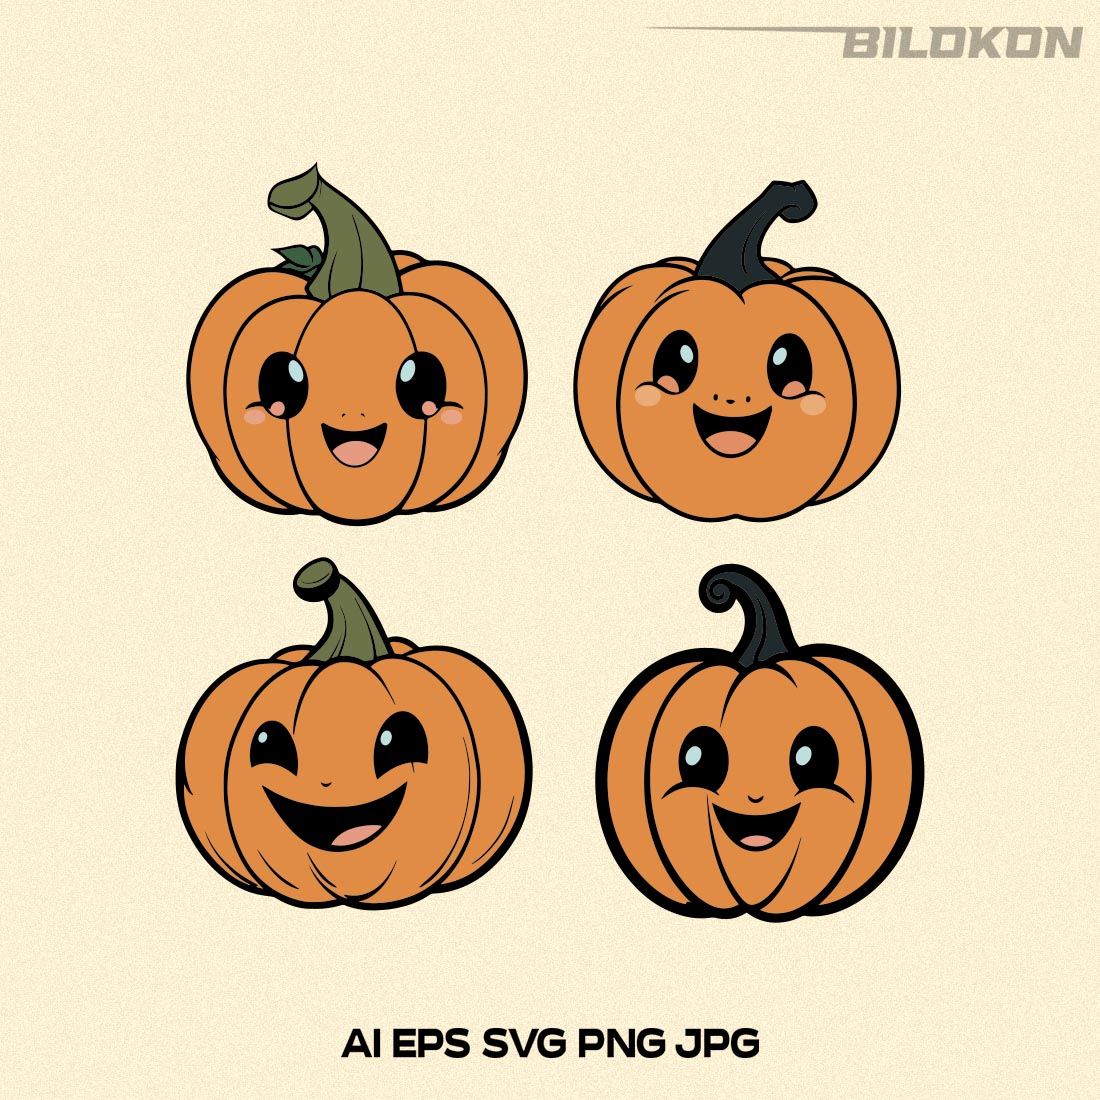 pumpkin for halloween drawing on white background - Stock Illustration  [91541930] - PIXTA